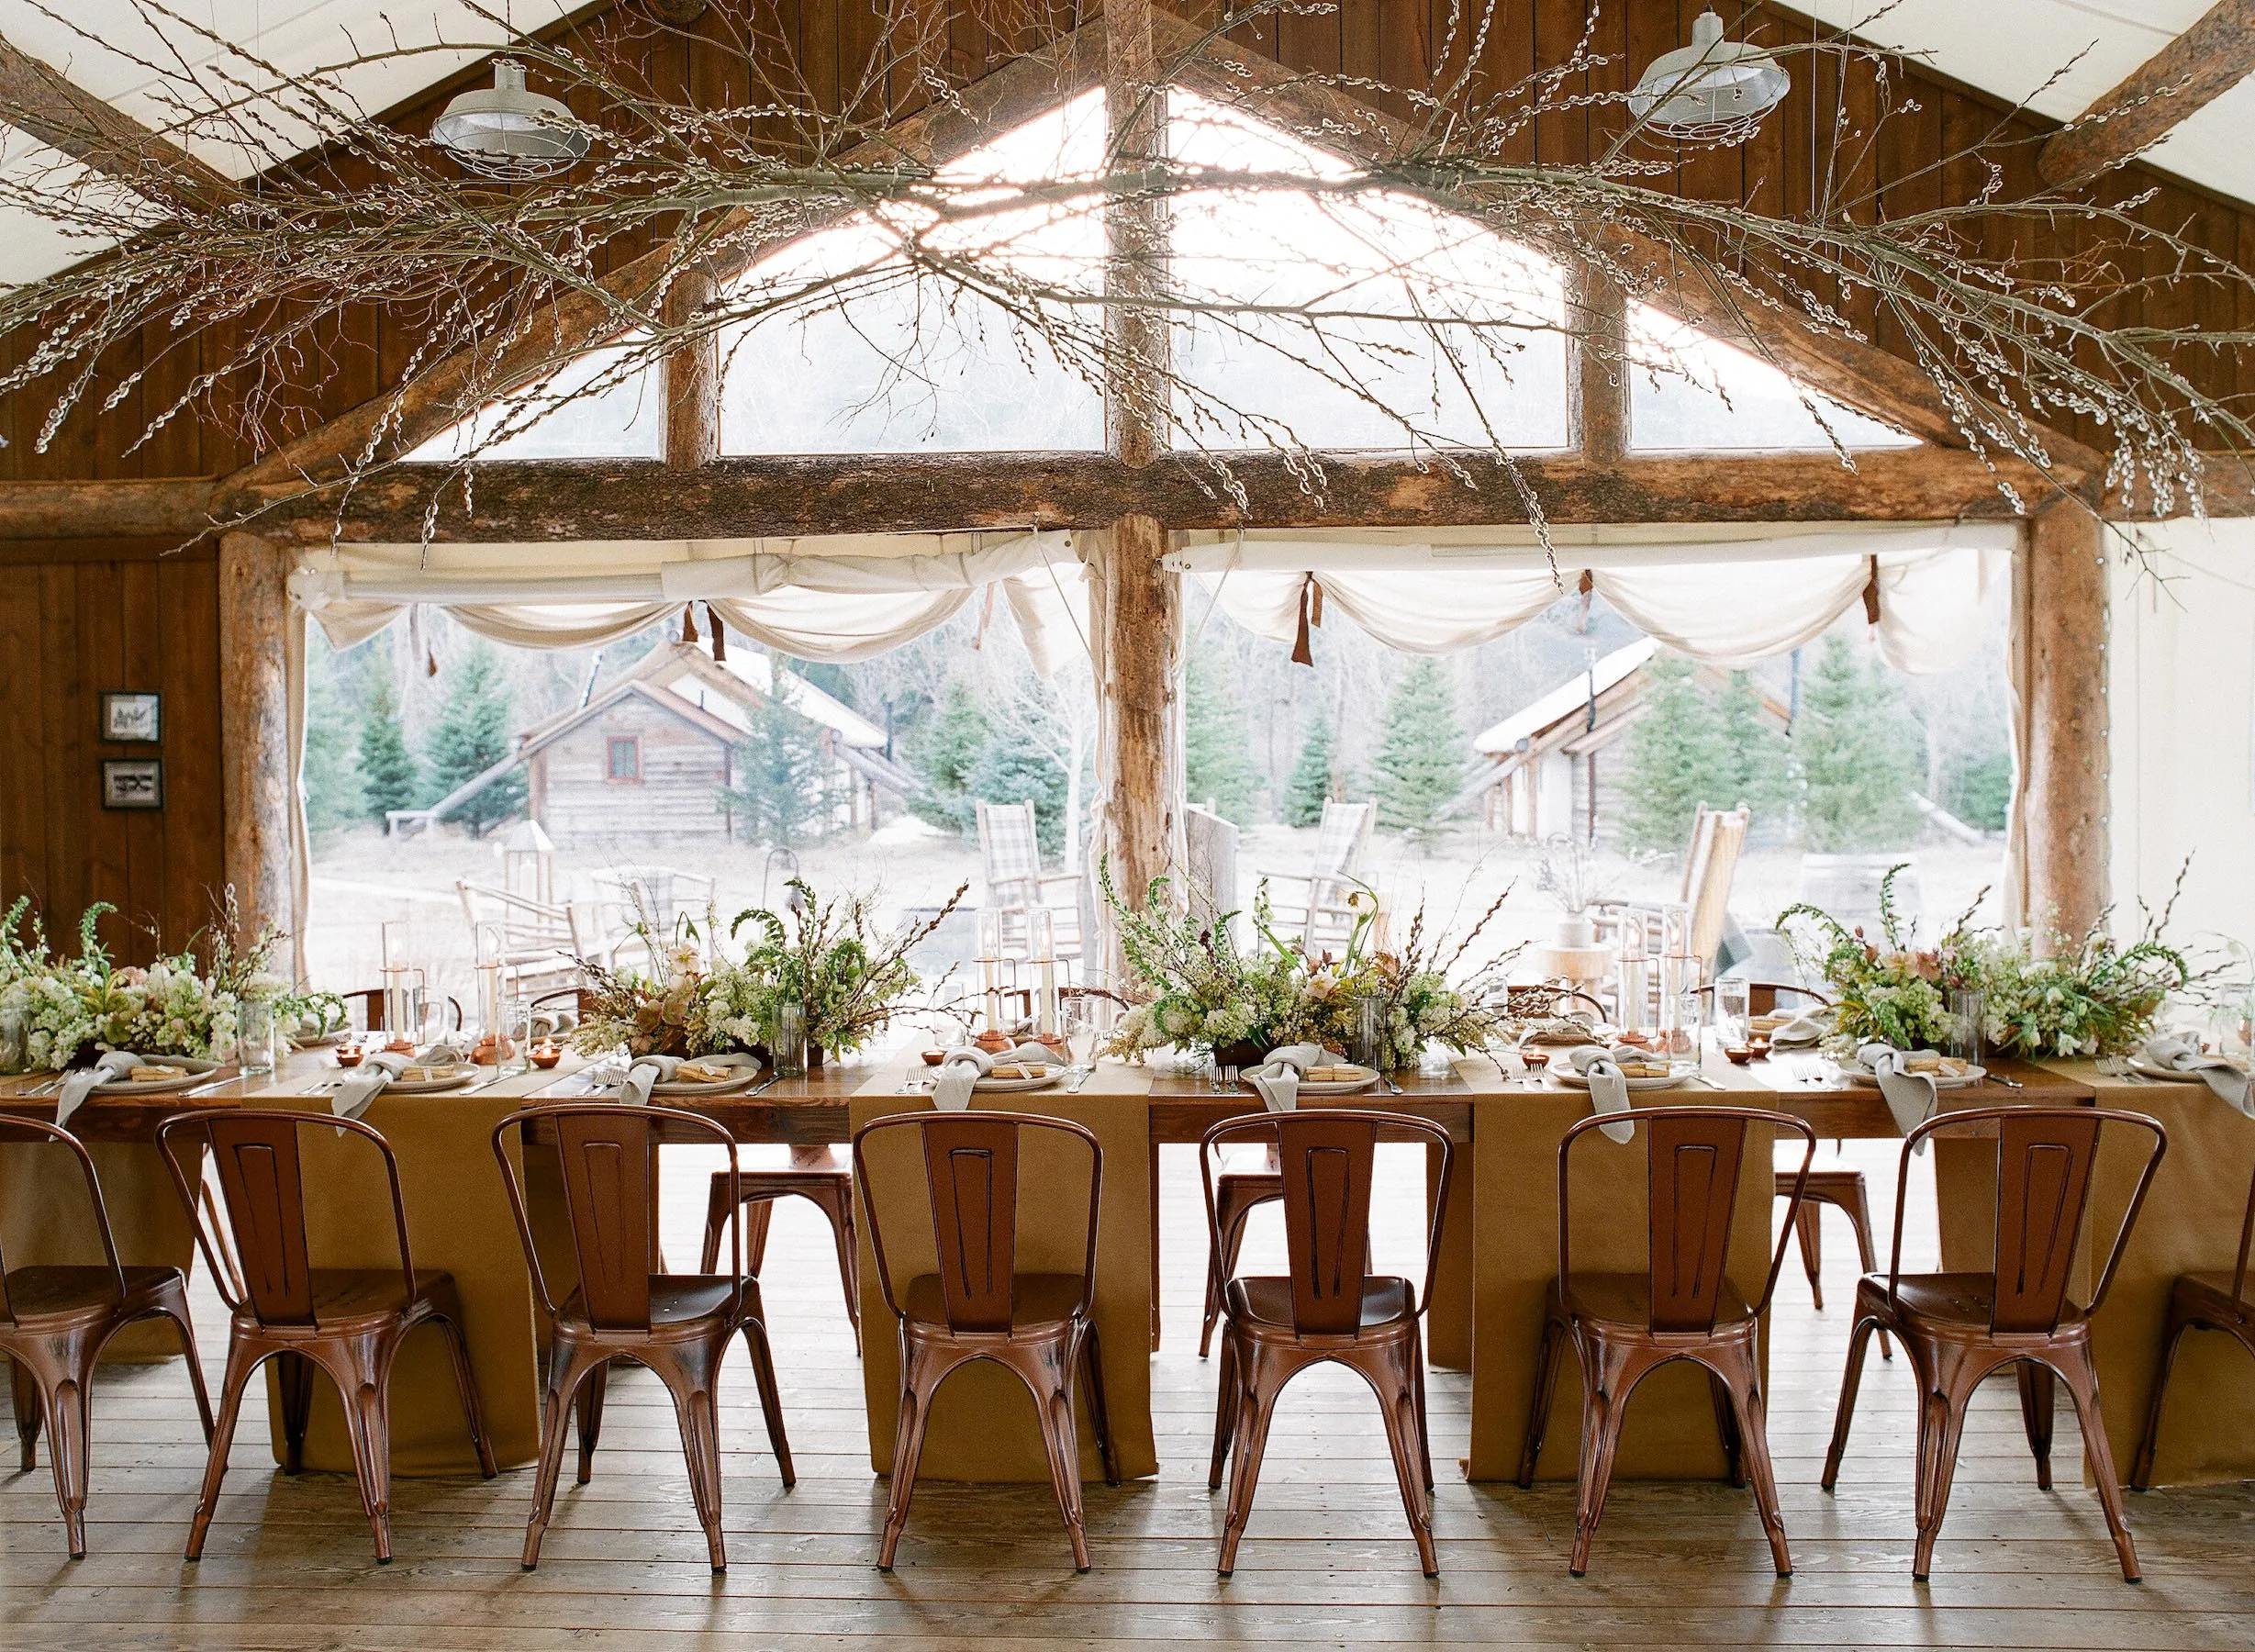 Interior wedding venue set with floral arrangements